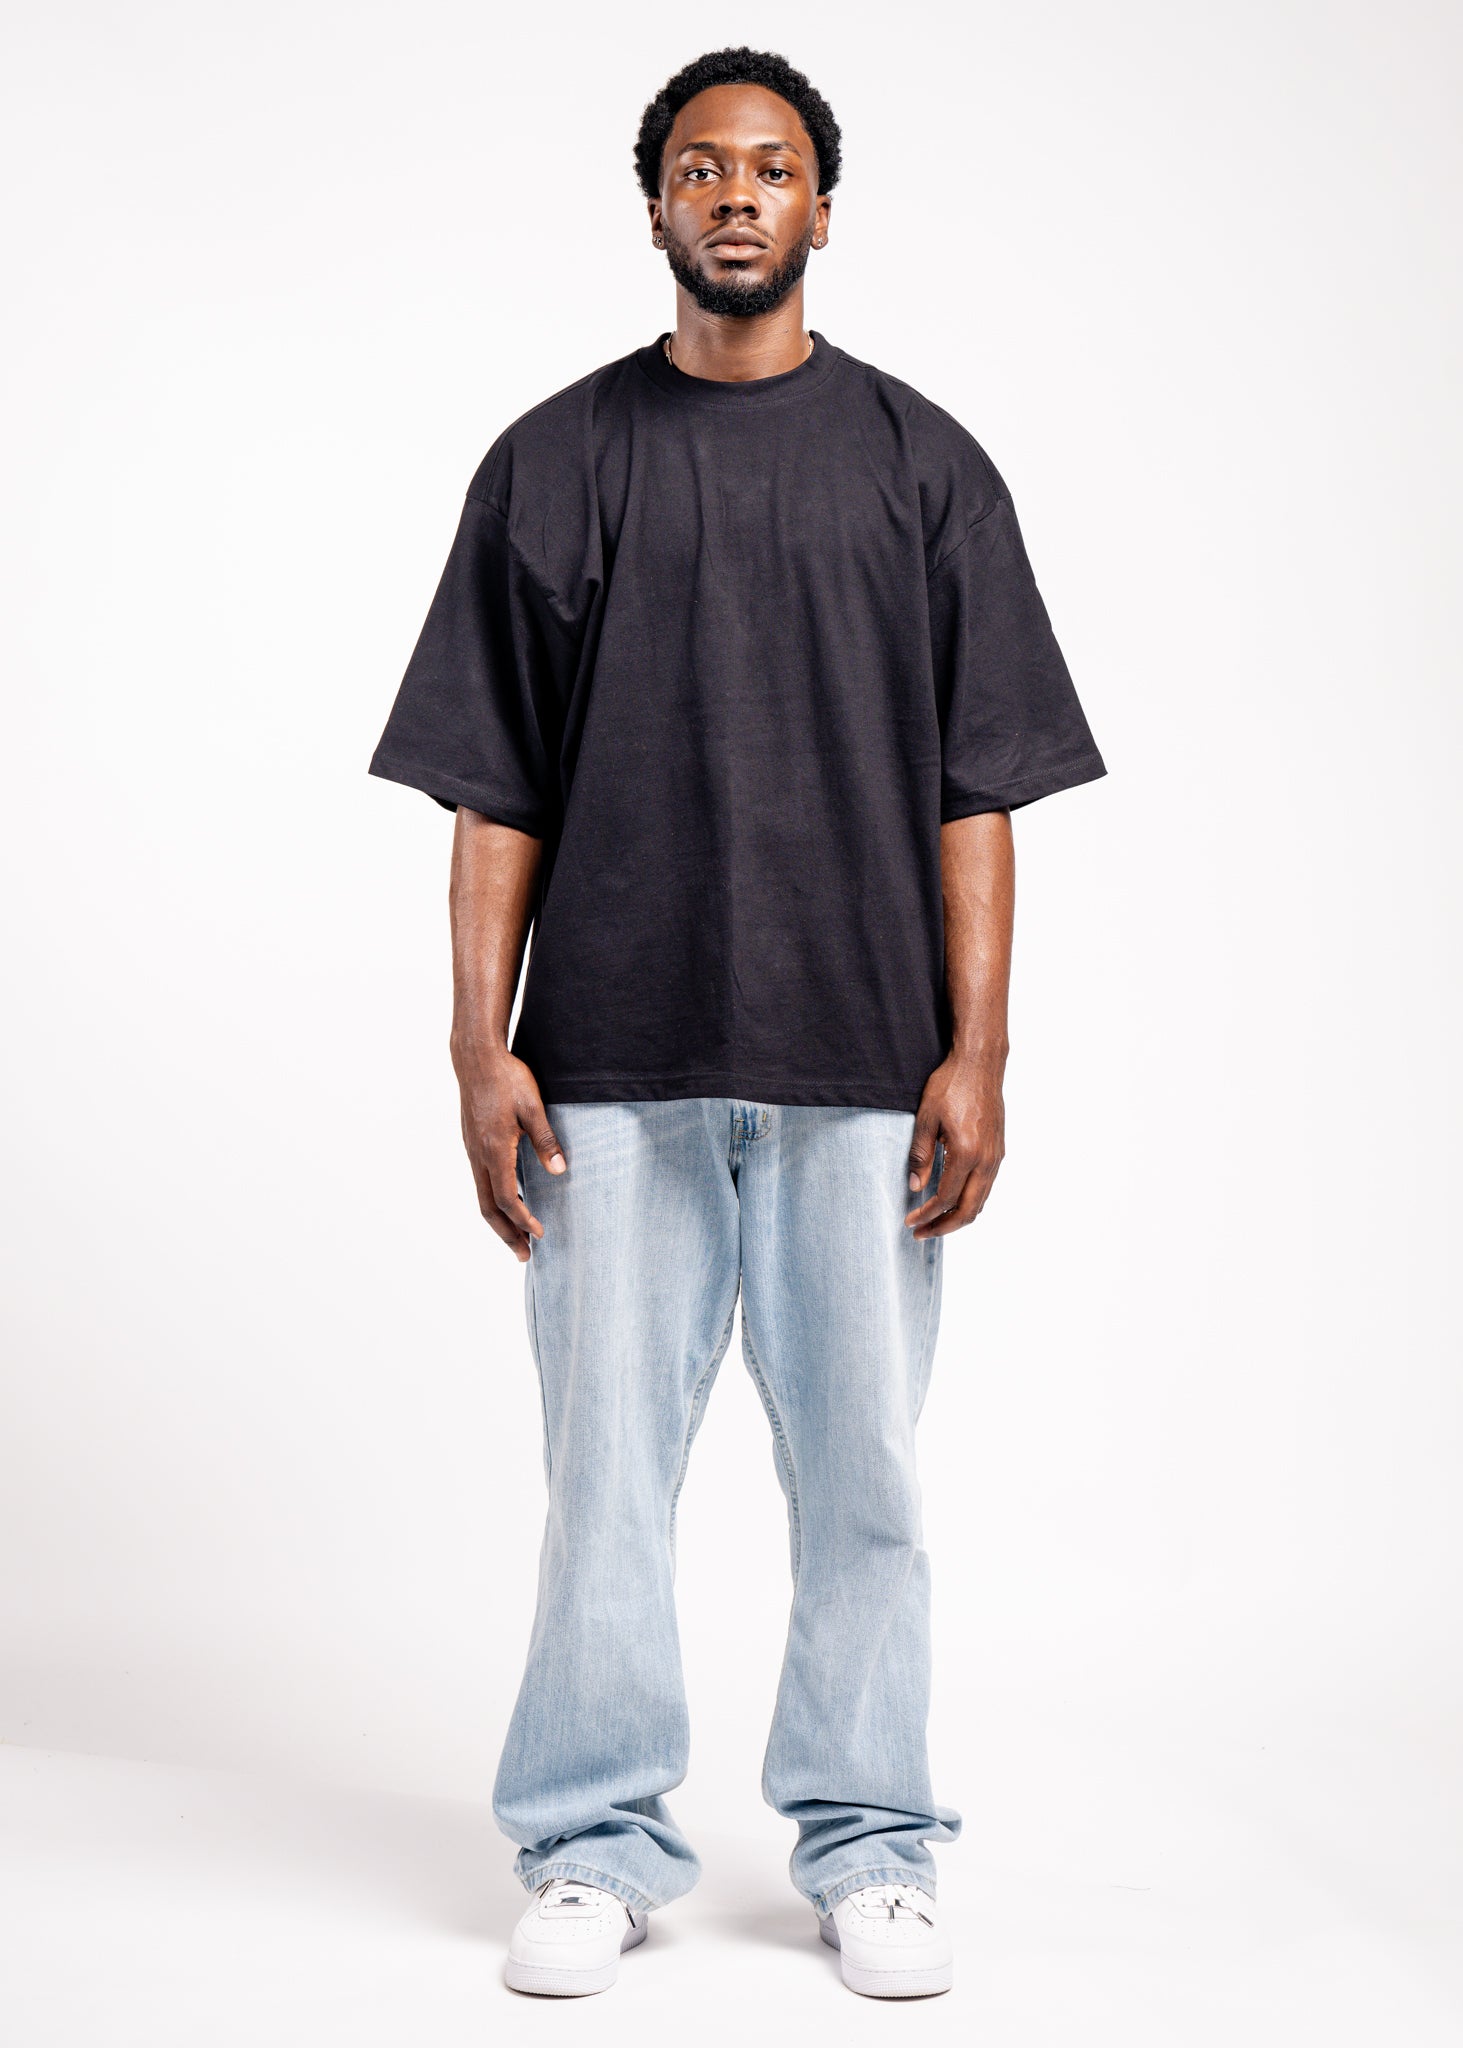 Shaka Wear Men's T Shirt – 2 Pack 7 oz Max Heavyweight Cotton Short Sleeve  Crewneck Tee Top Tshirts Regular Big Size MHS02 Black S 2pk